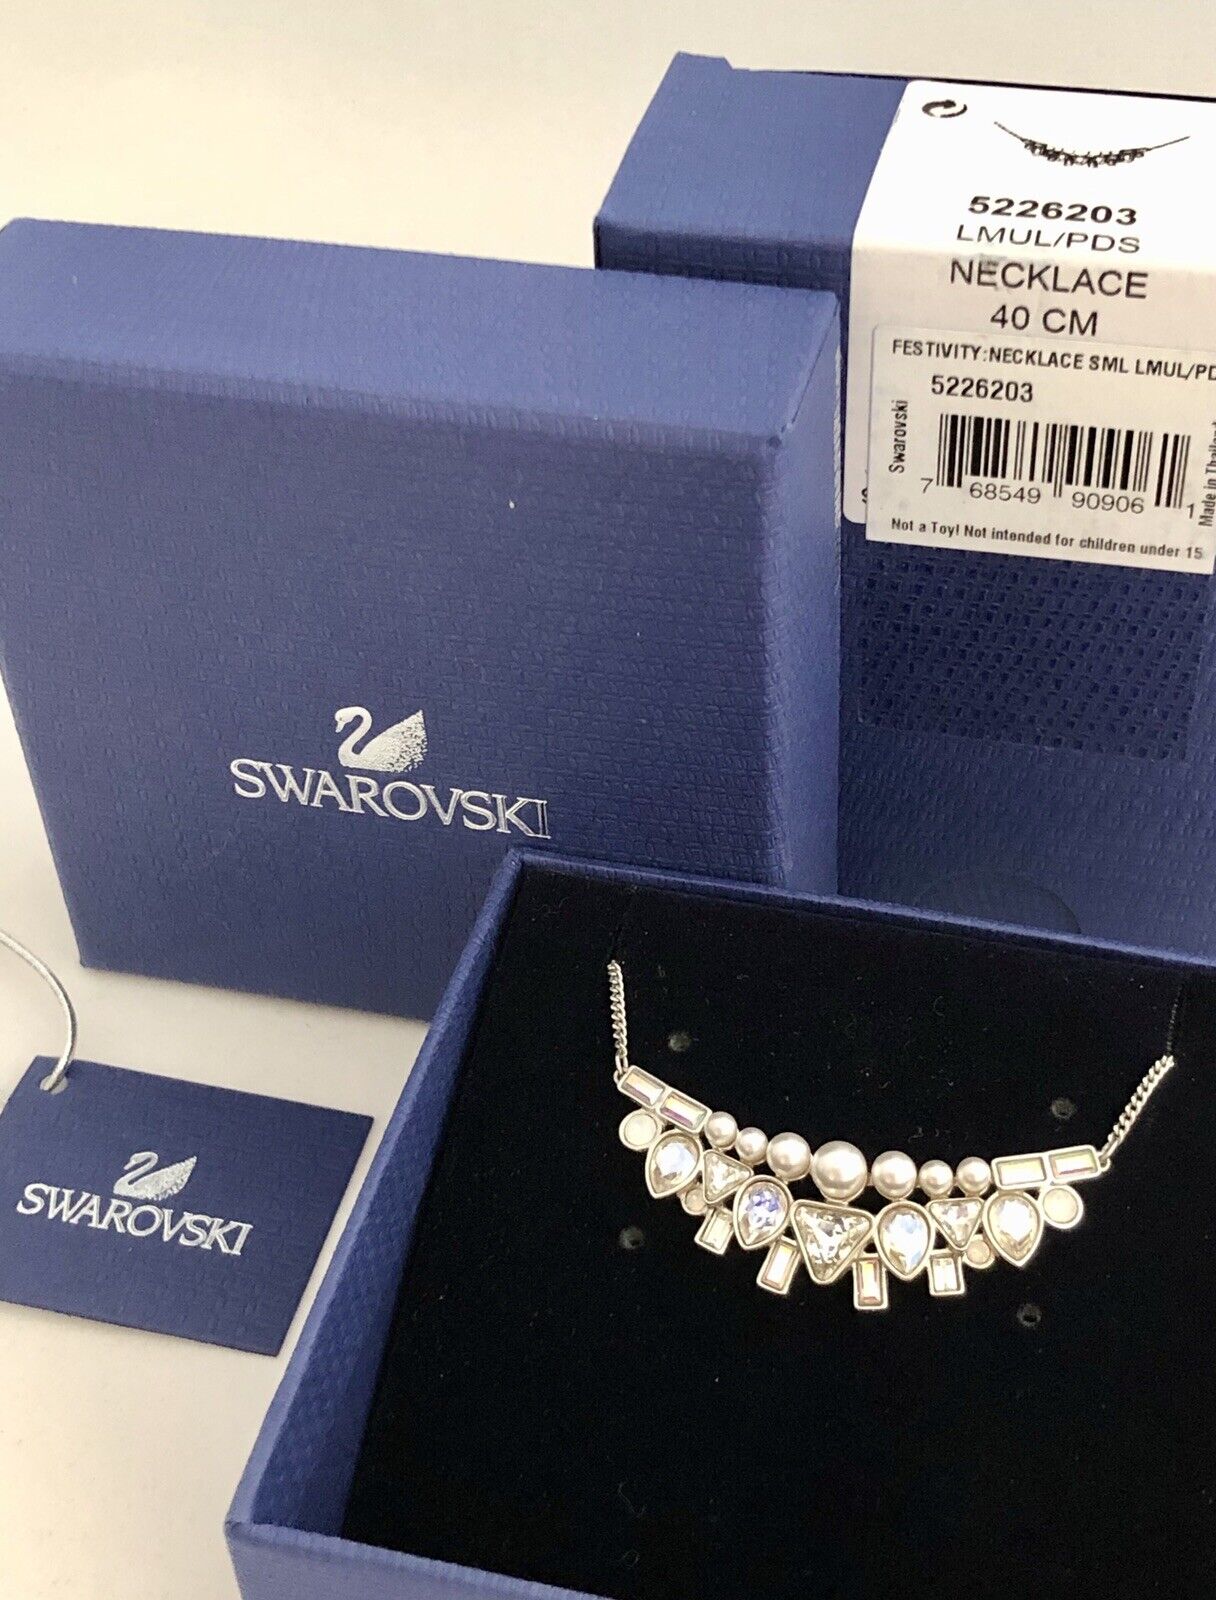 Authentic Swarovski Crystal “FESTIVITY” Necklace #5226203 NEW